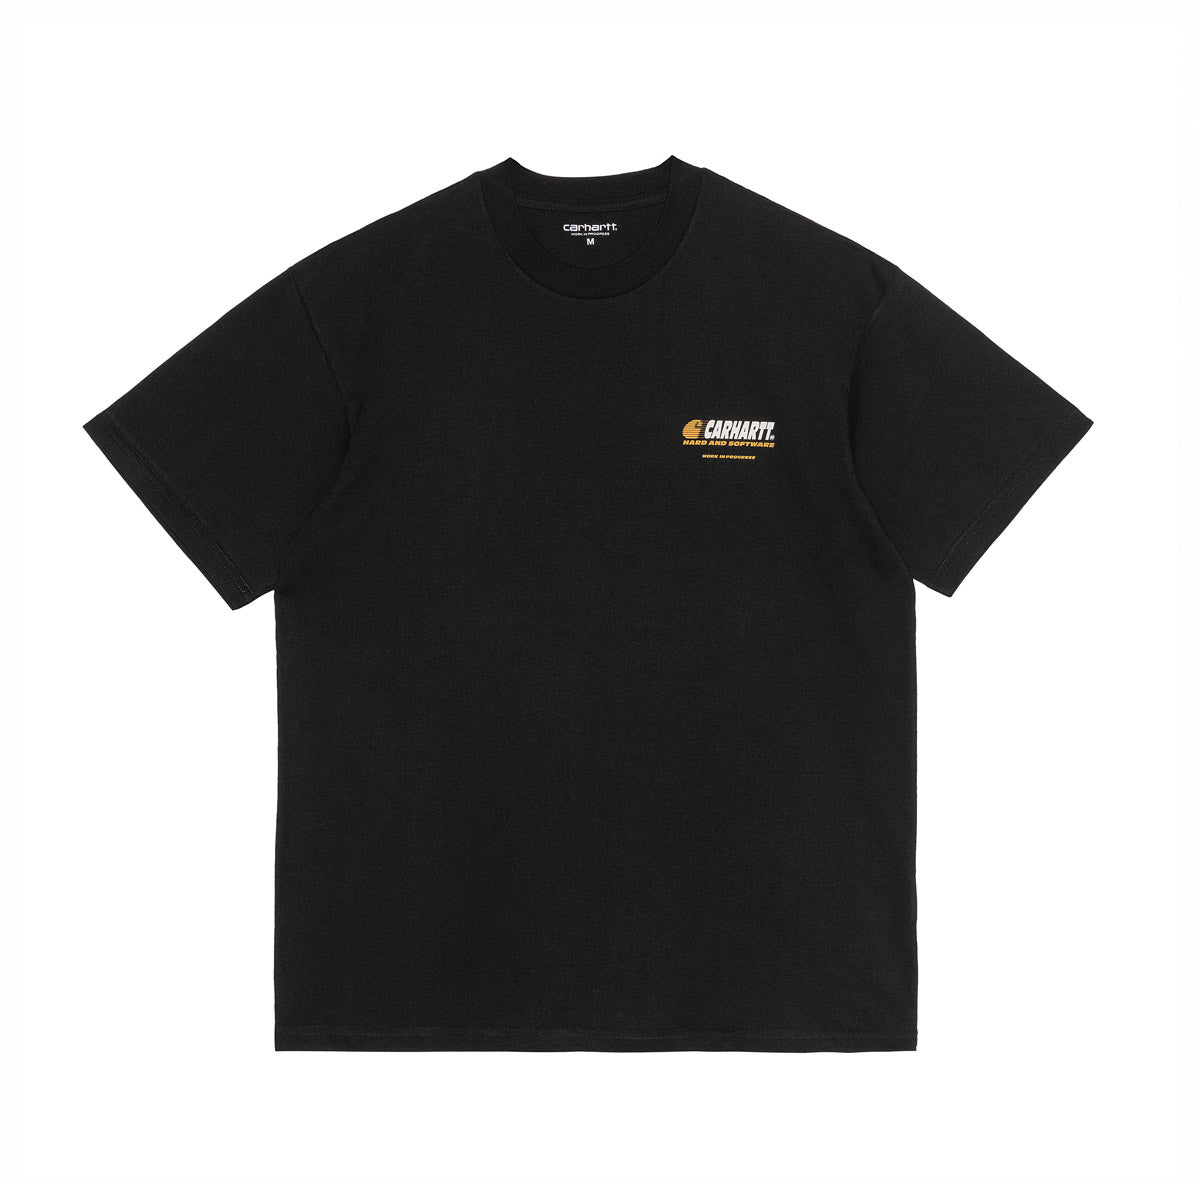 Carhartt WIP S/S Software T-Shirt Black